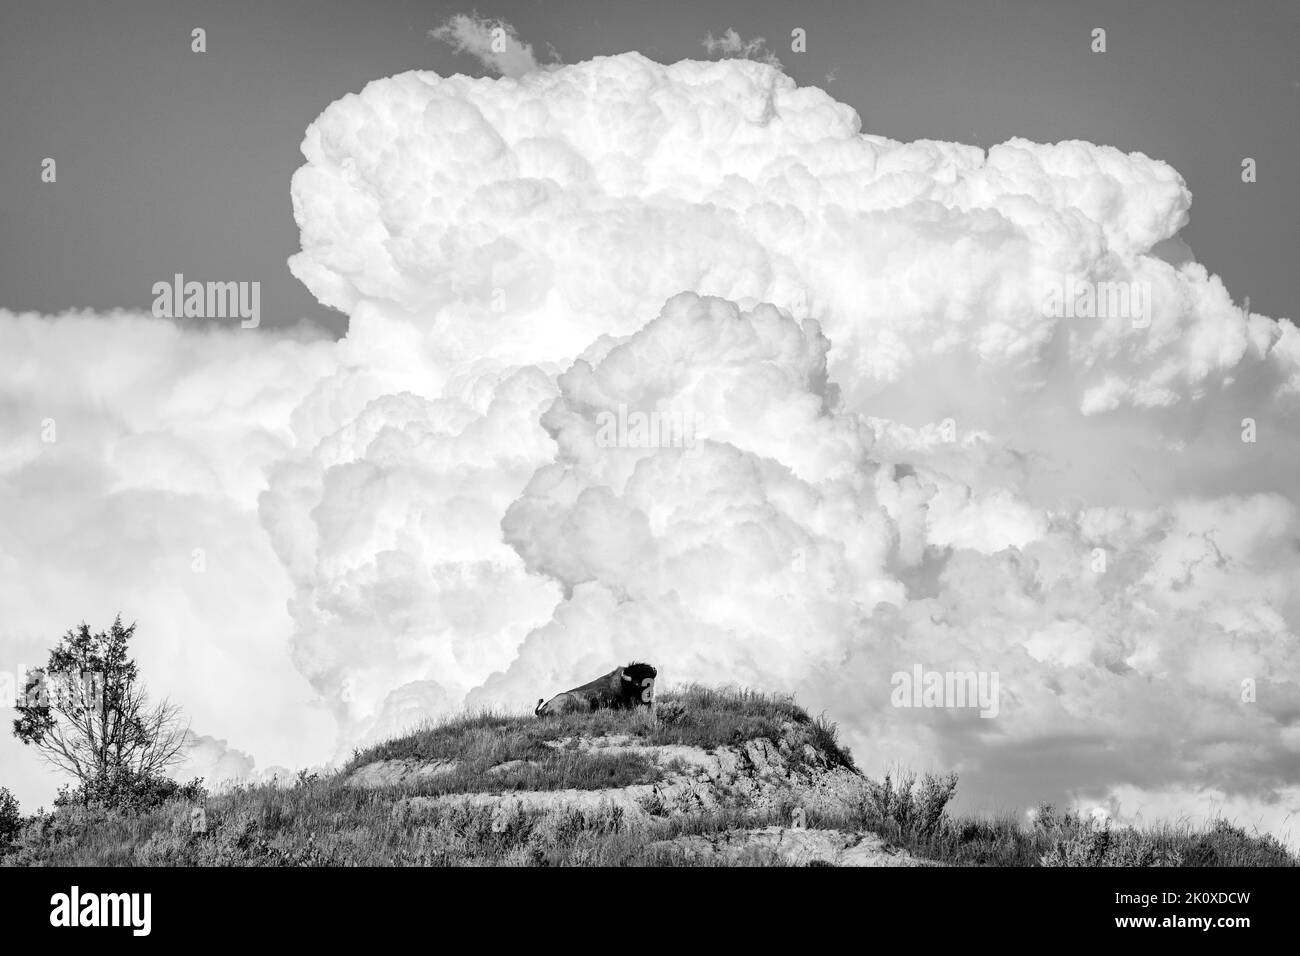 USA, Great Plains, North Dakota, Theodore Roosevelt National Park, Bison and Thunderstorm Stock Photo